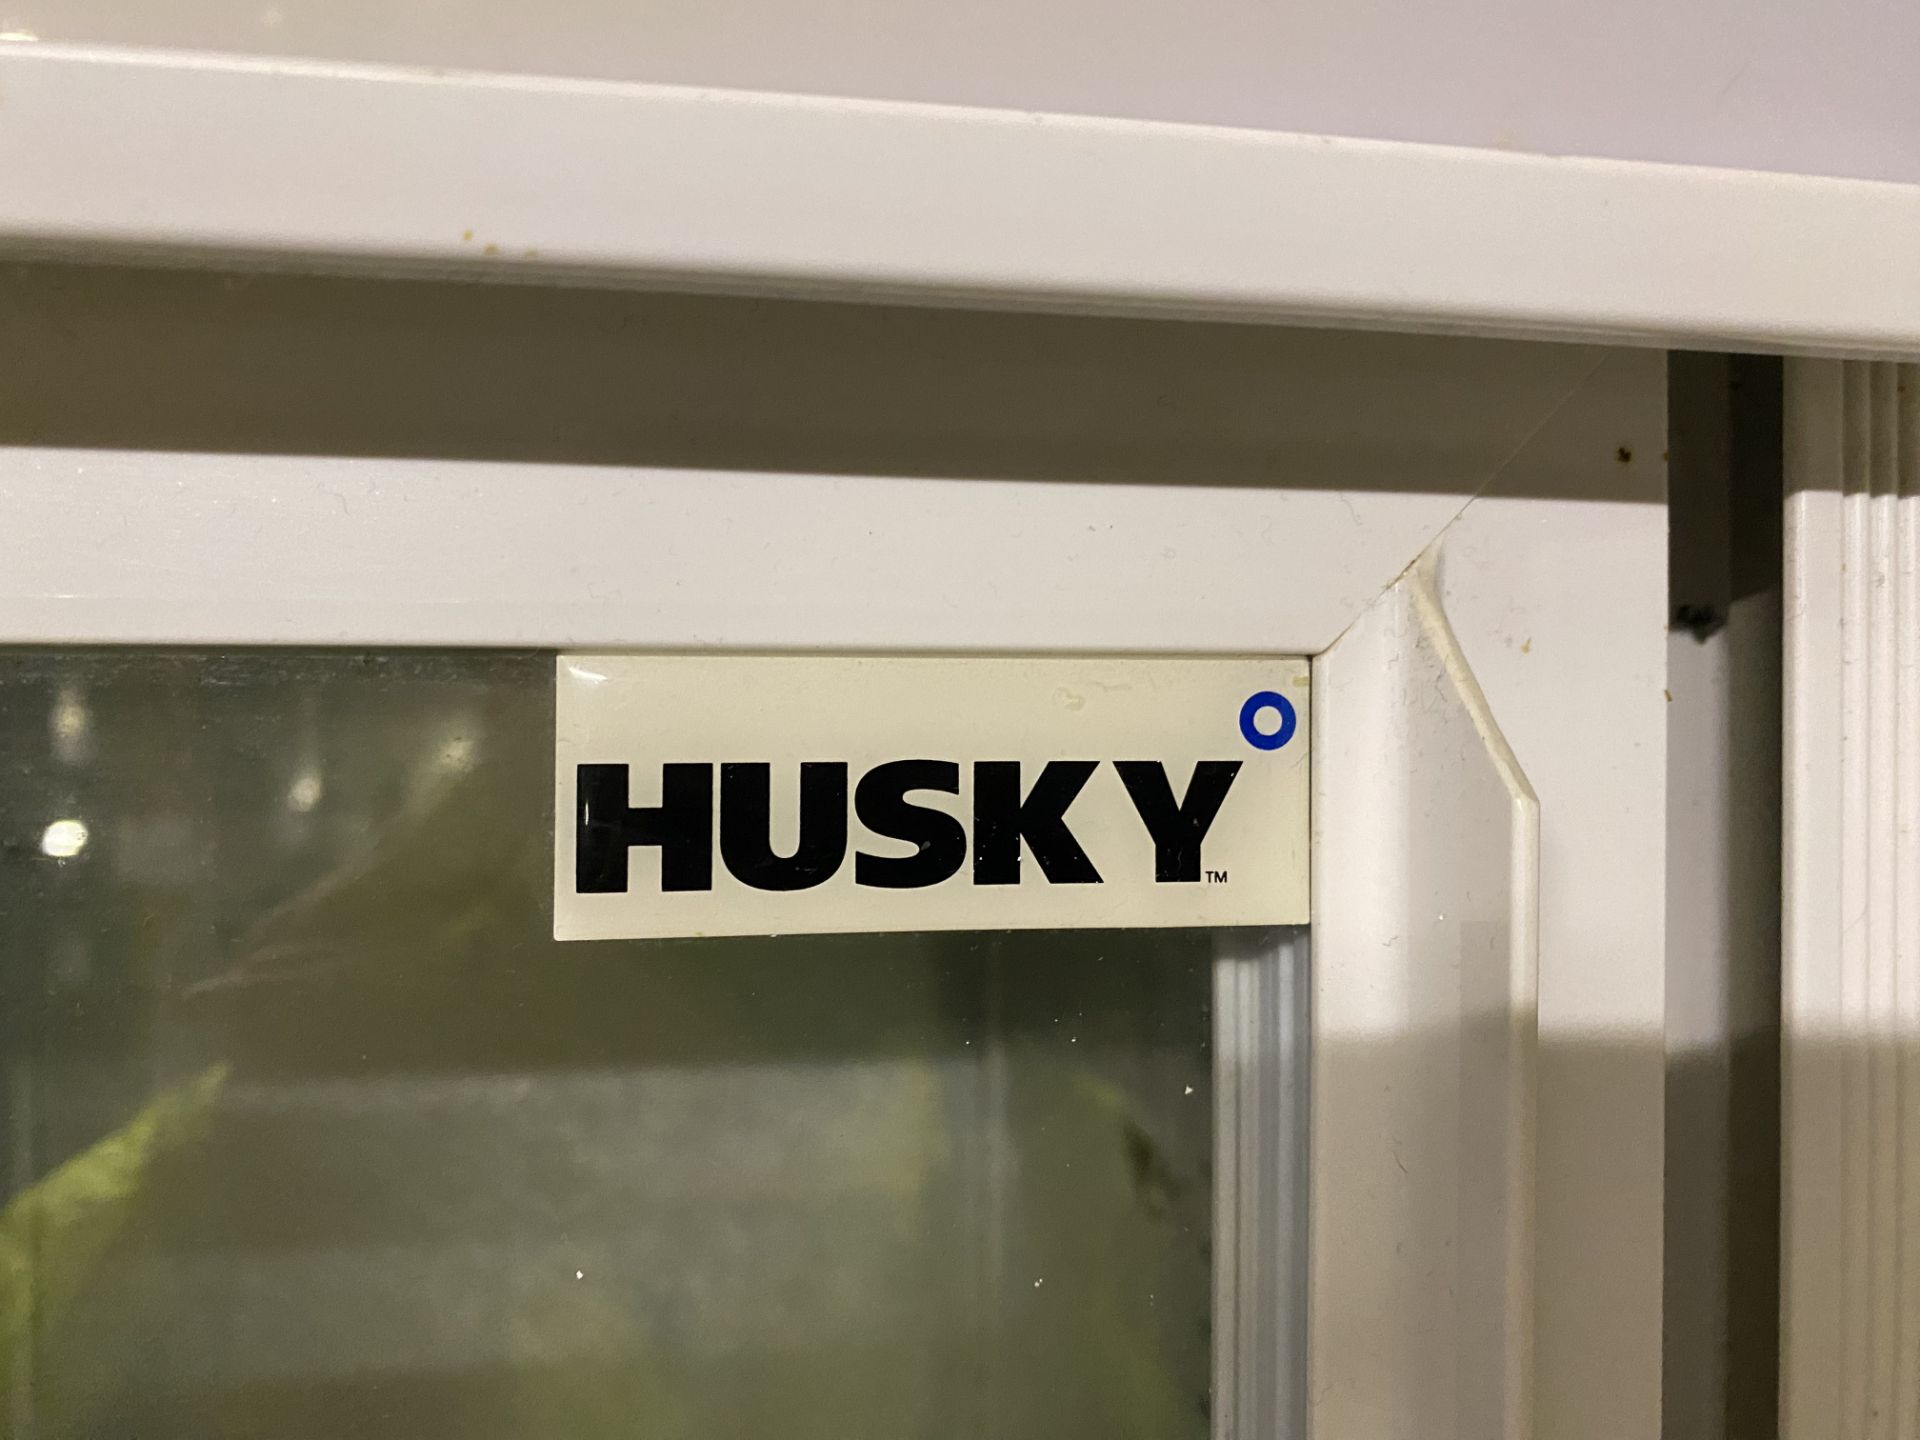 Husky double sliding door glass fronted upright display fridge, model HUS-C800-S - Image 2 of 4